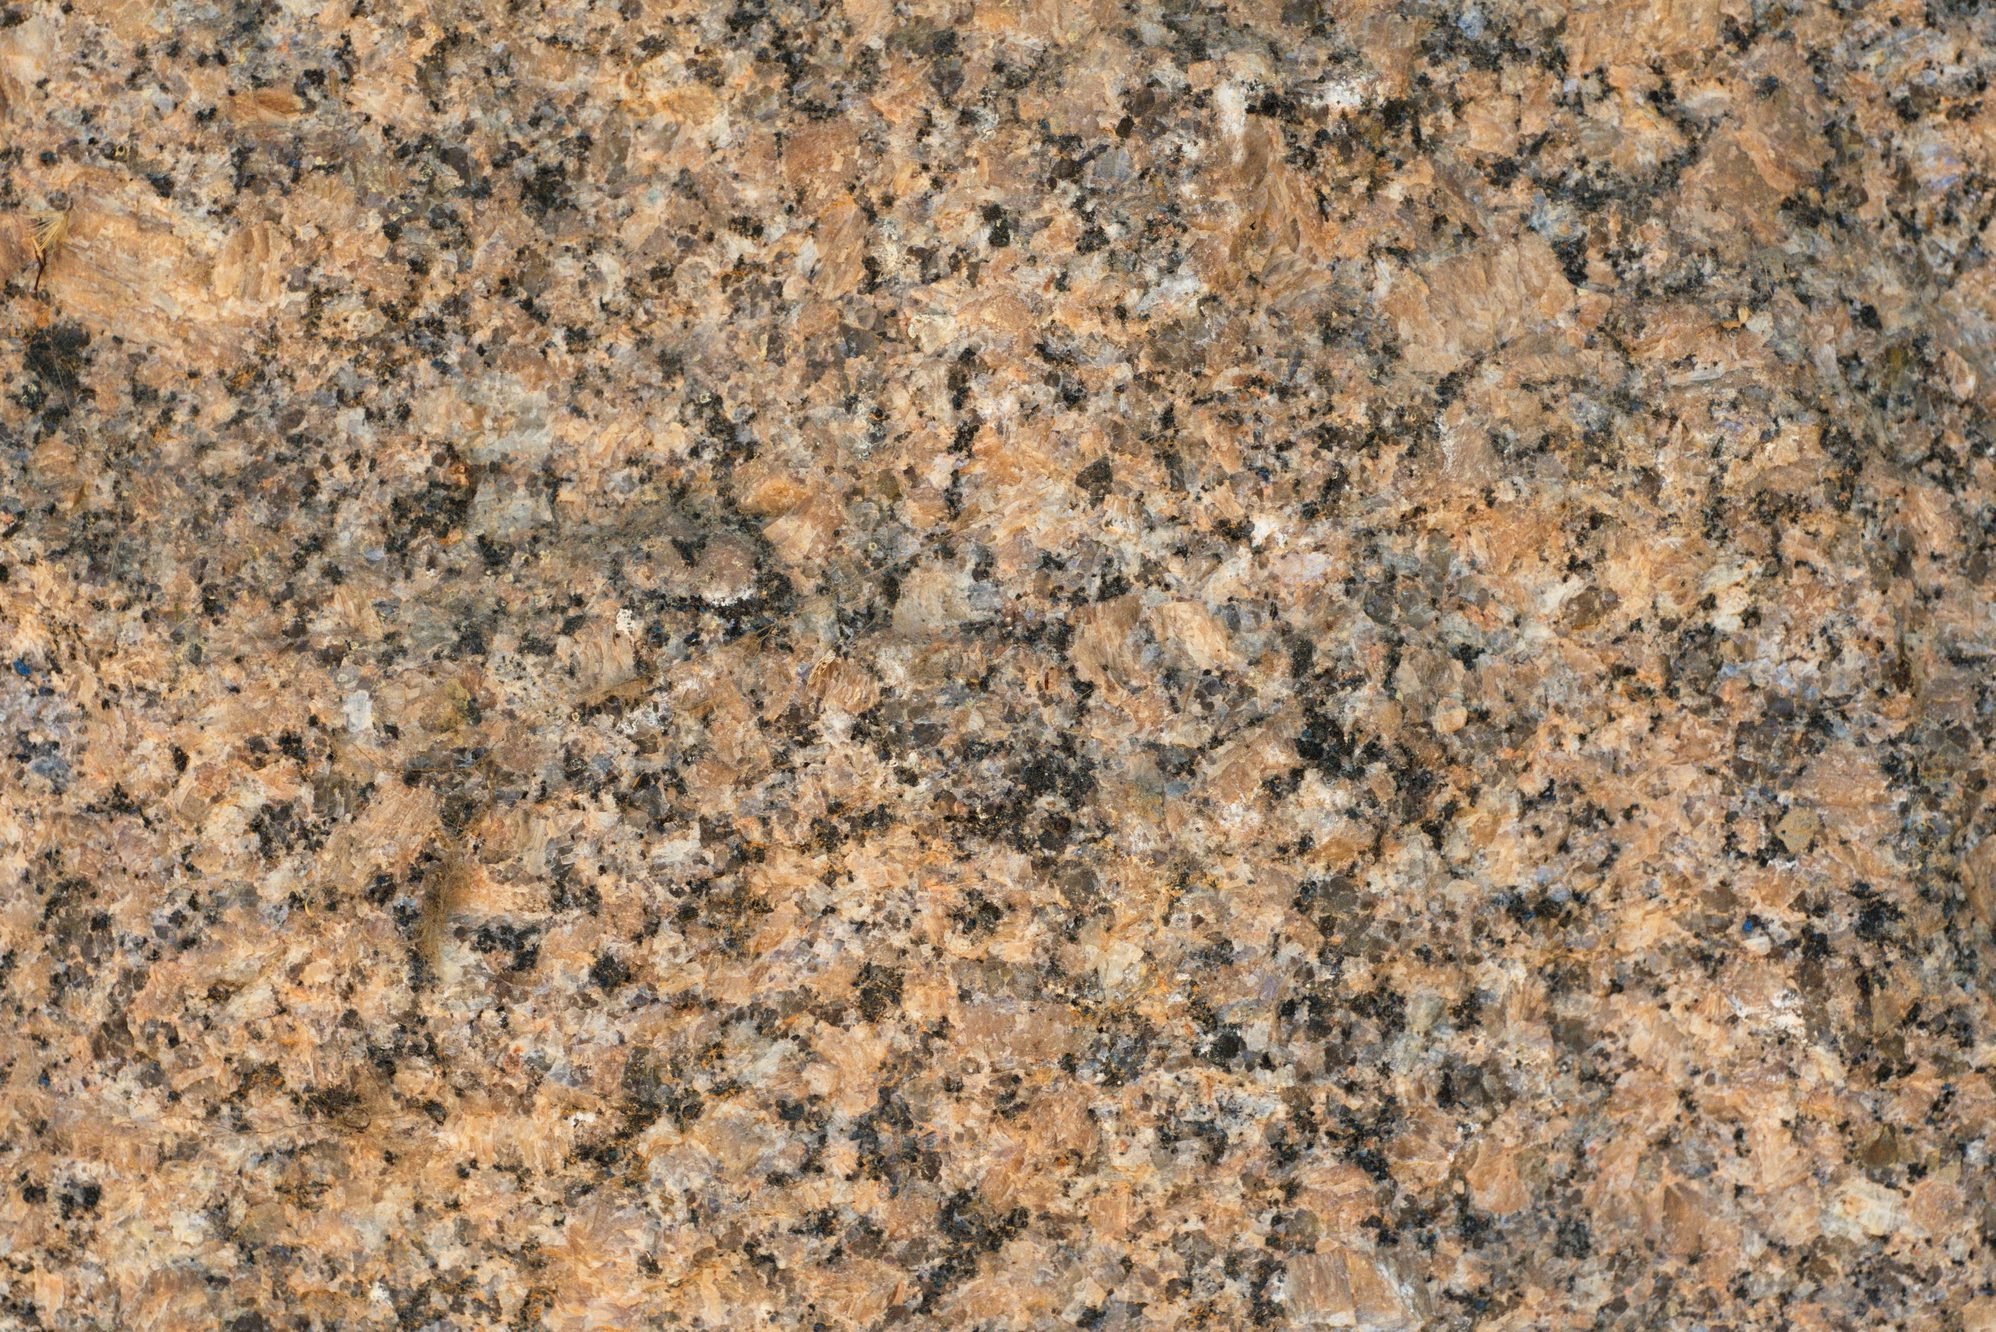 Granite countertop texture surface